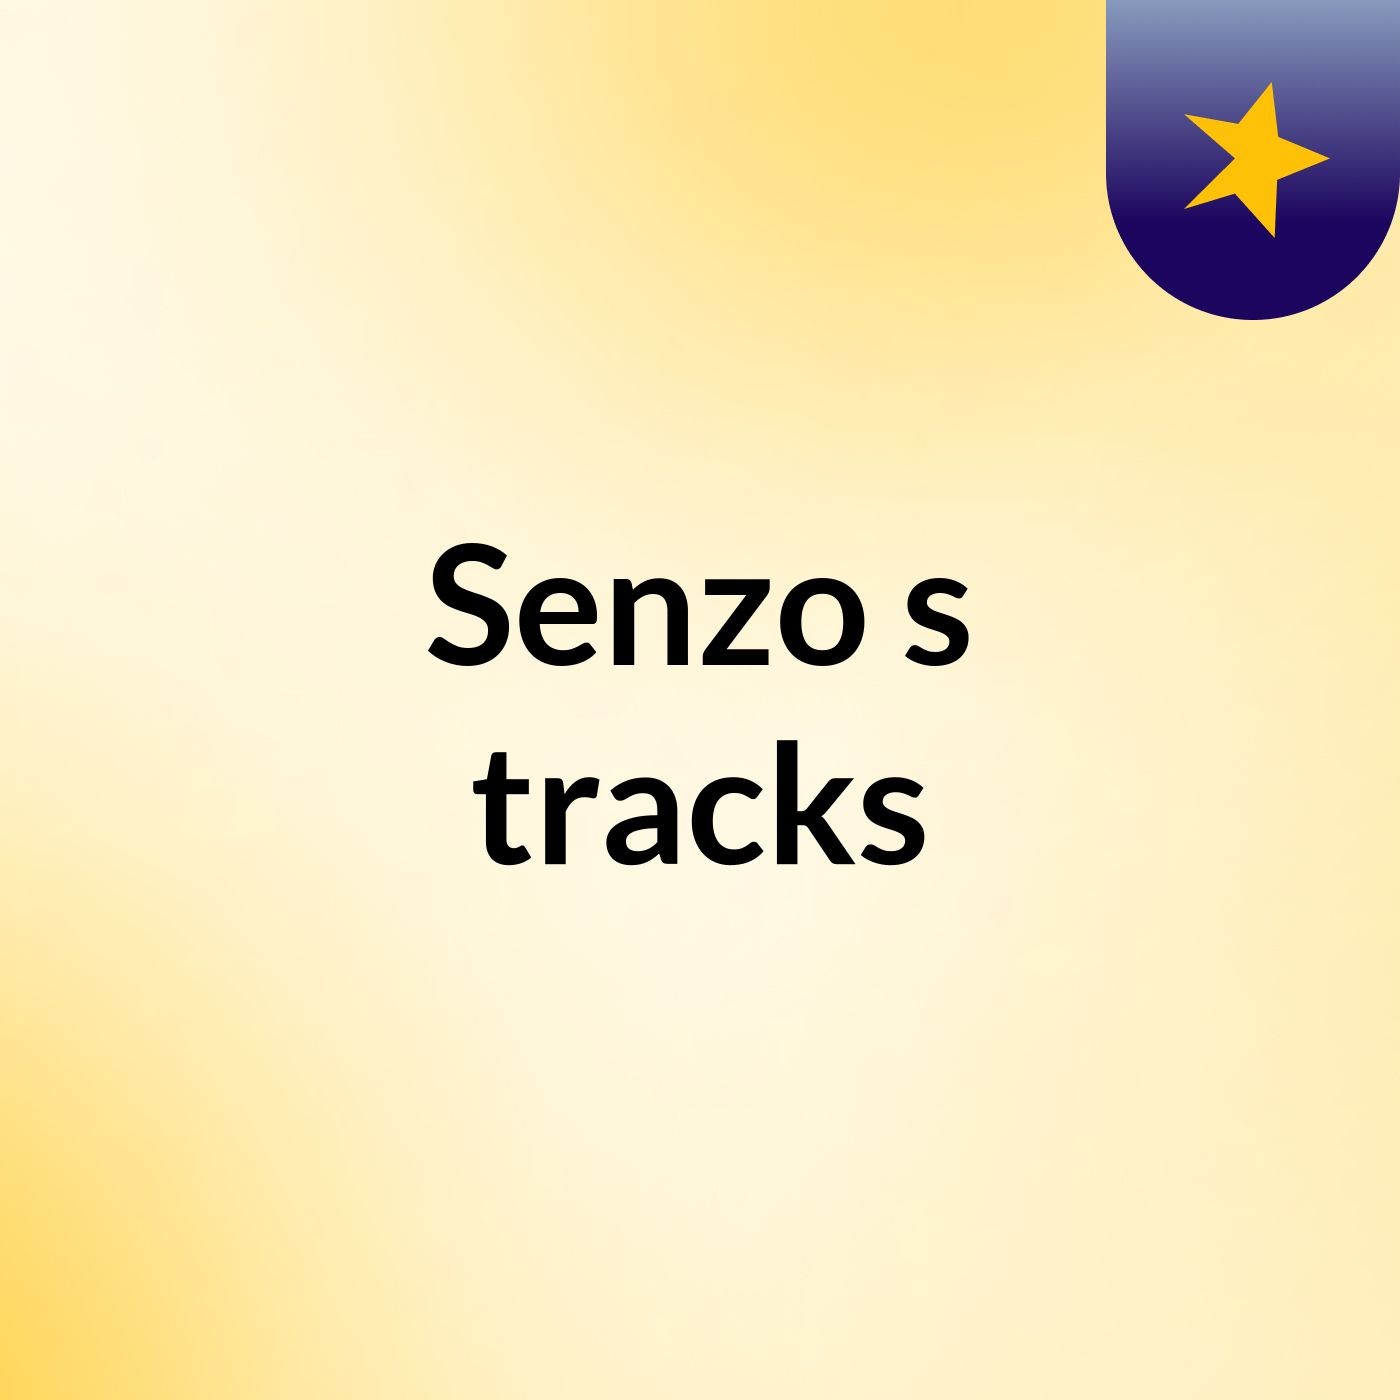 Senzo's tracks